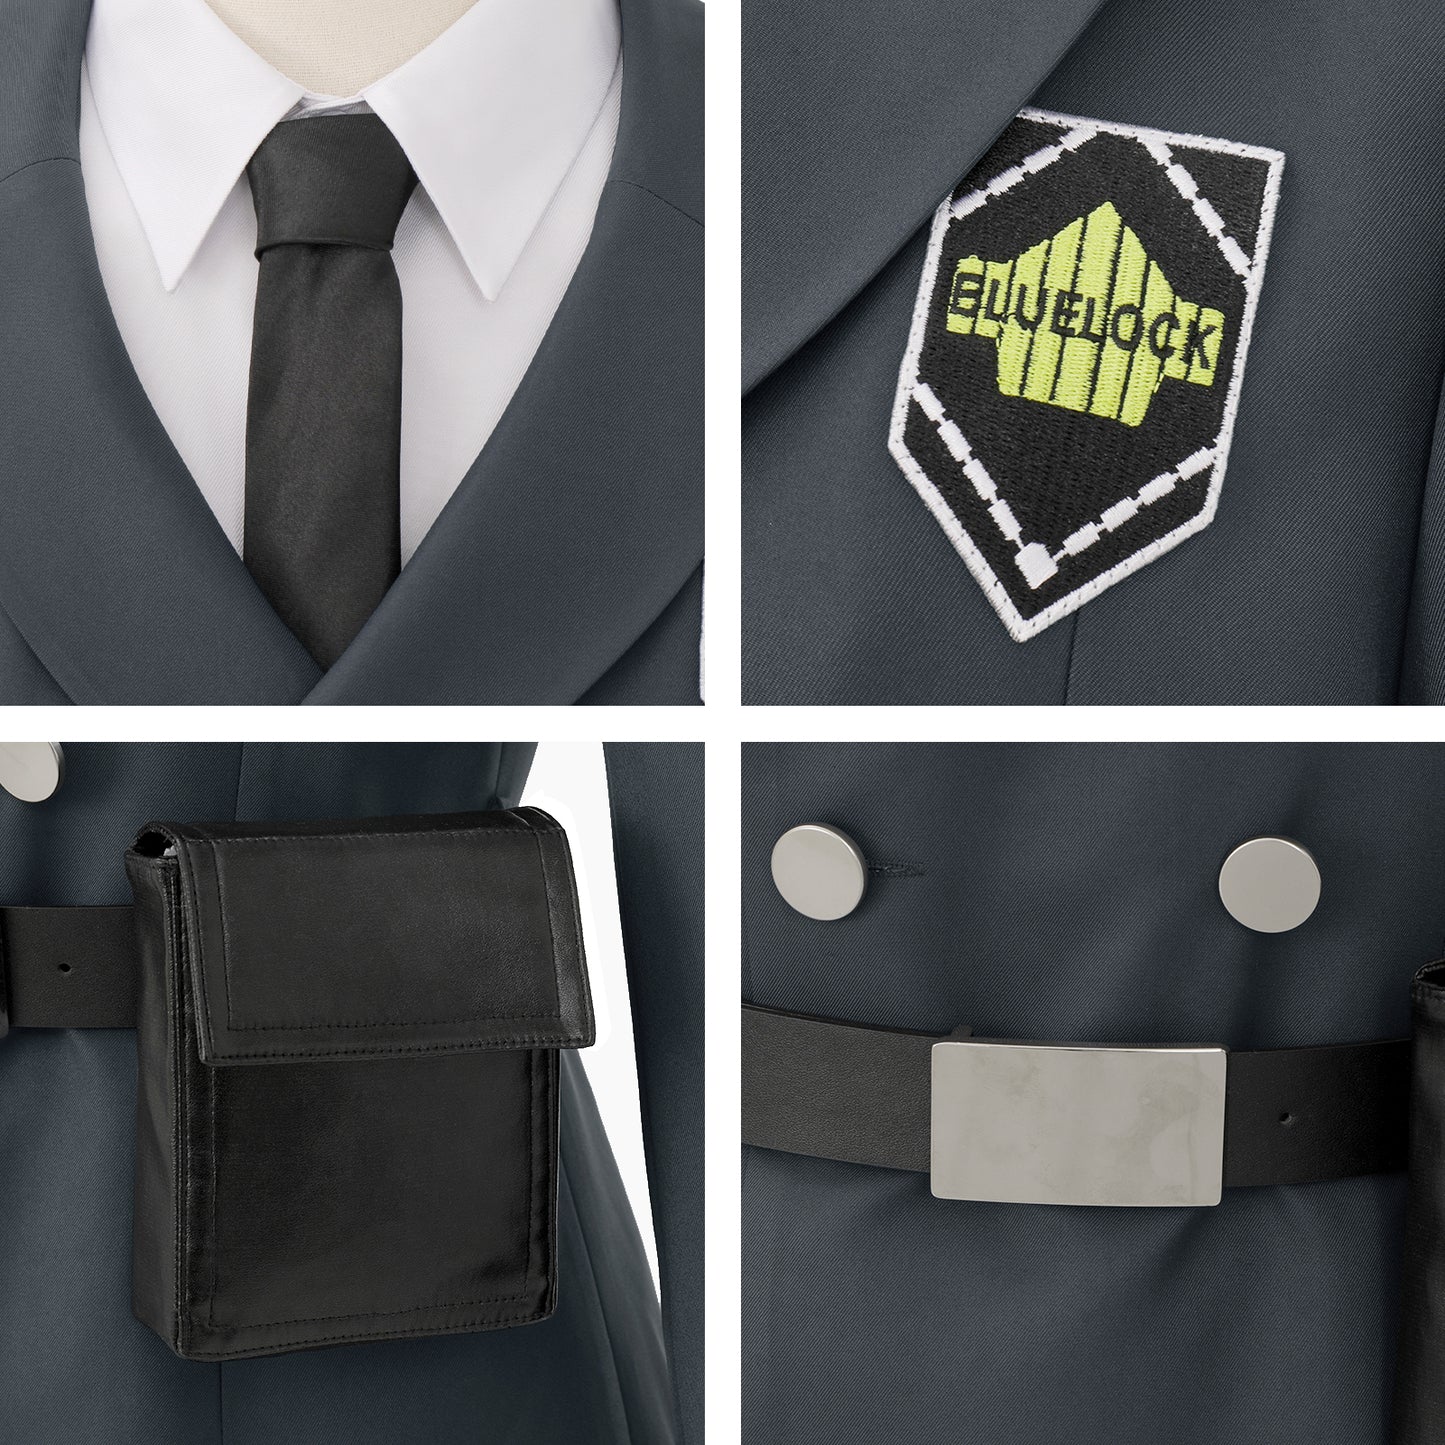 BLUE LOCK Chigiri Hyoma Cosplay Costume Police Guard Costume Uniform Suit Full Sets